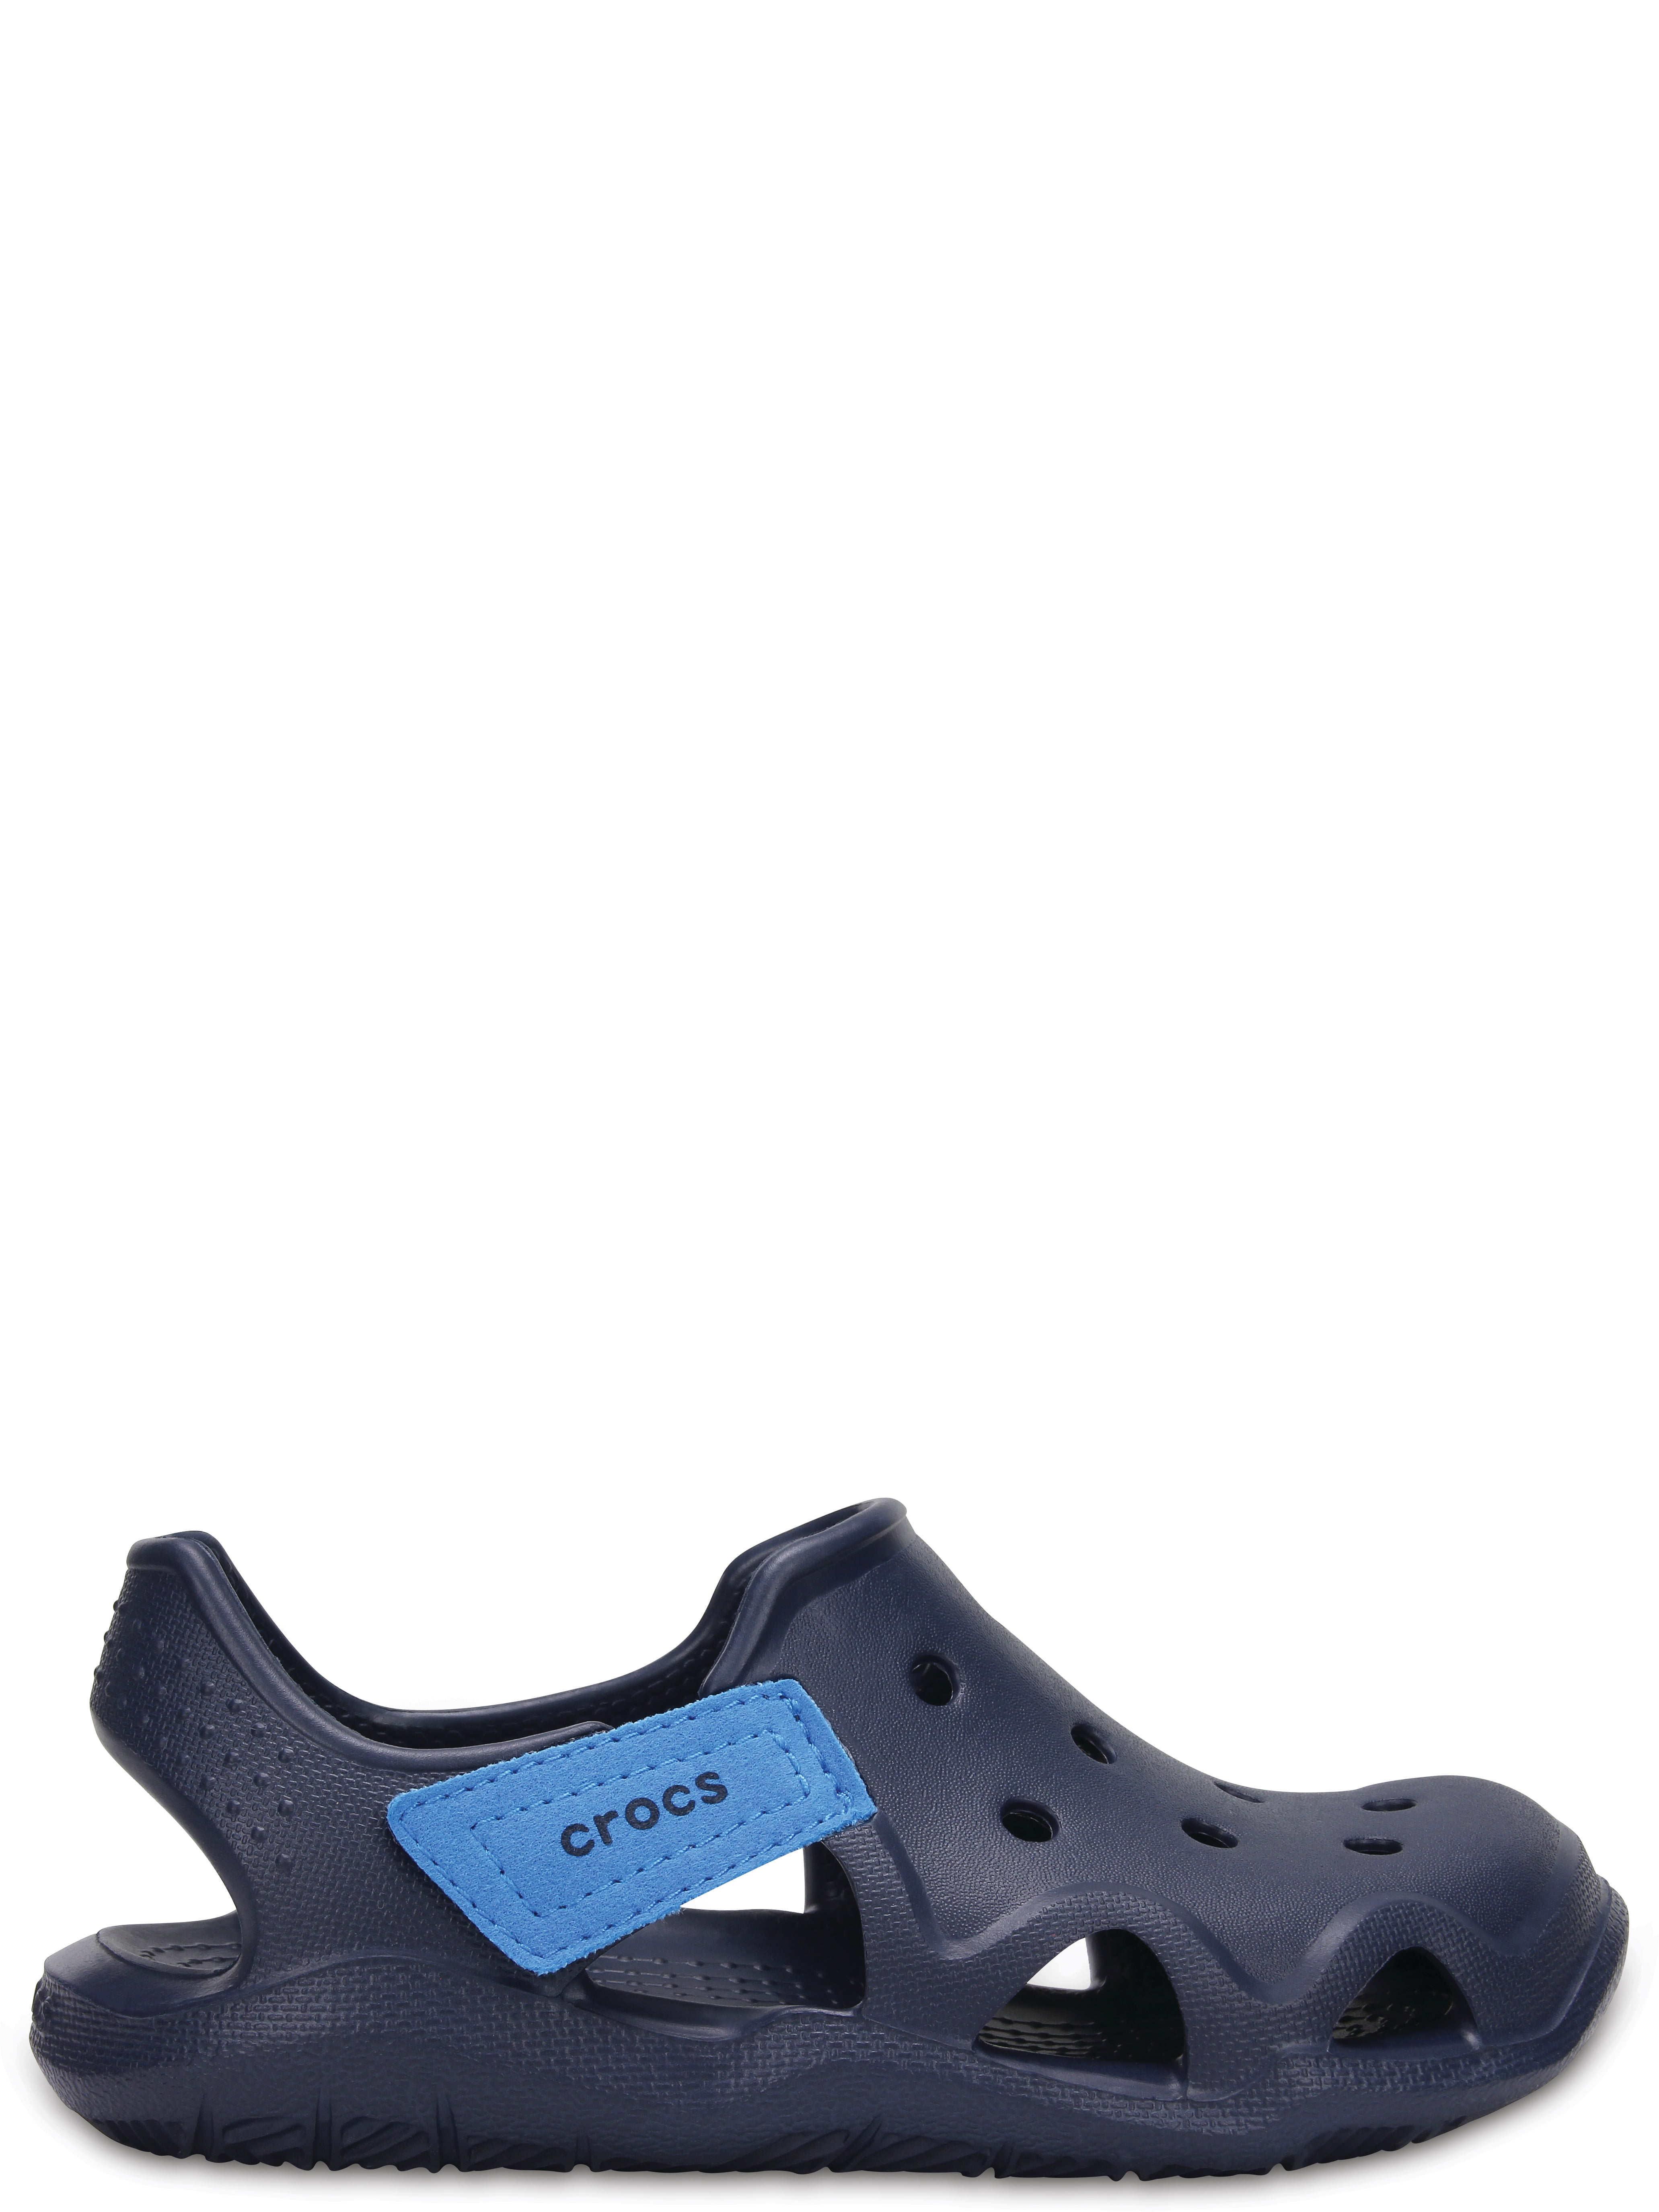 Kleidung & Accessoires Kids Crocs Swiftwater Wave Graphic Kids Navy Clogs  Sandals Sz Size Schuhe für Jungen LA2342259